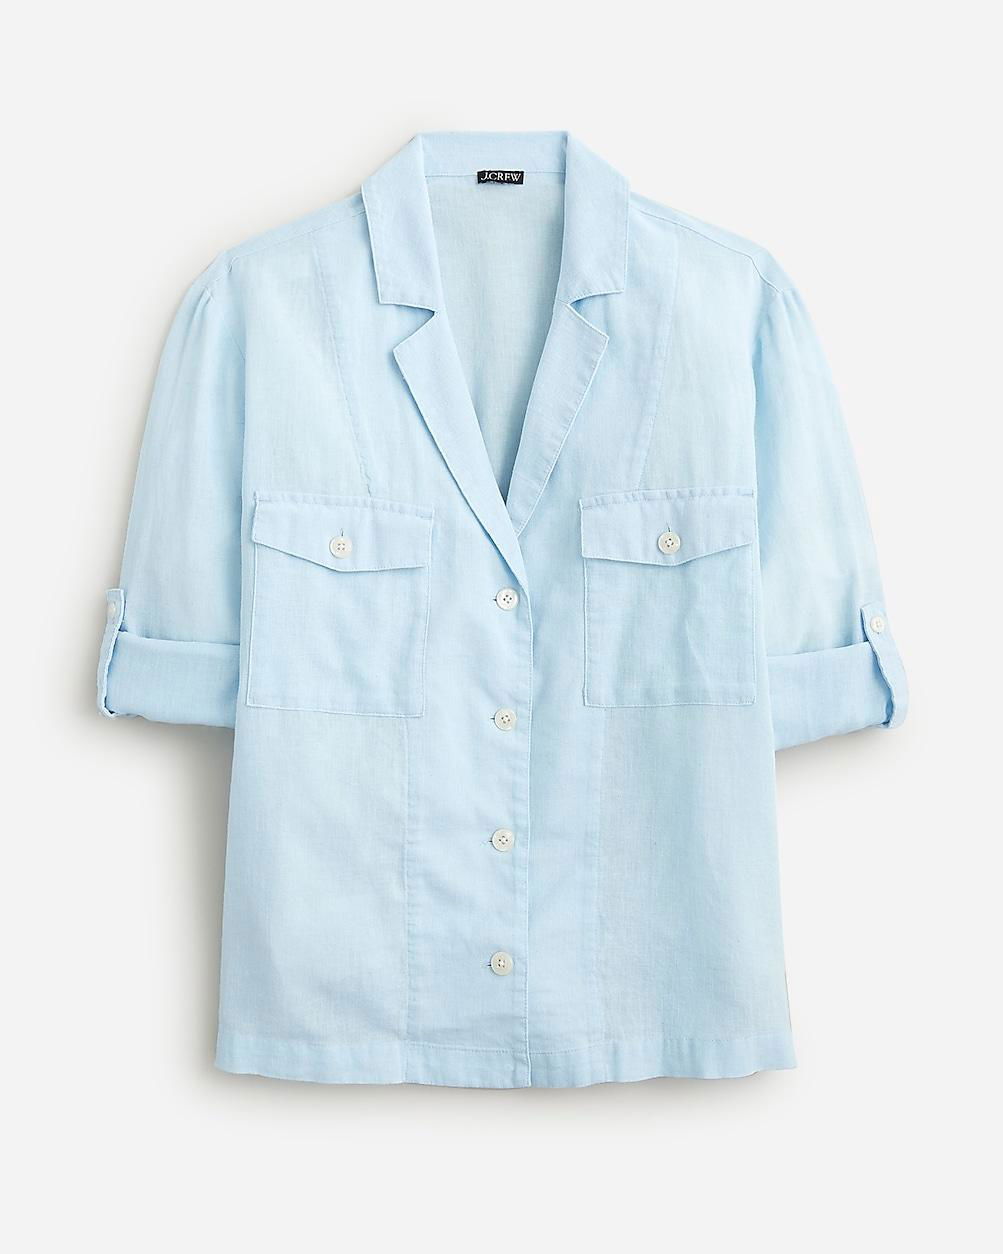 Camp-collar shirt in featherweight linen blend by J.CREW